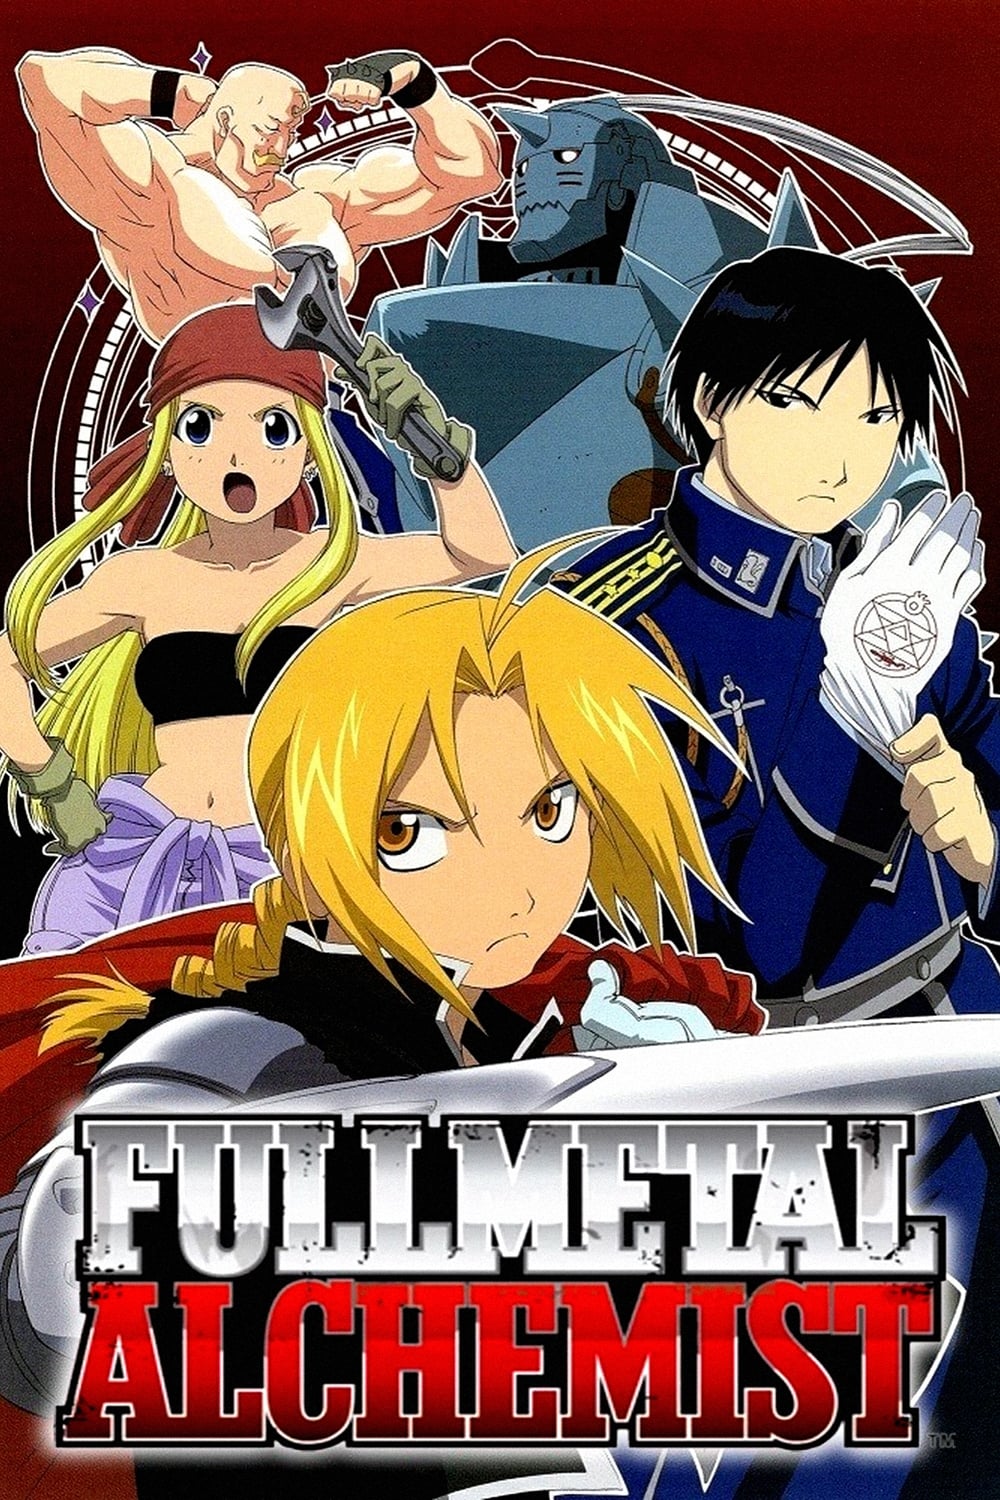 Original Fullmetal Alchemist Anime Poster